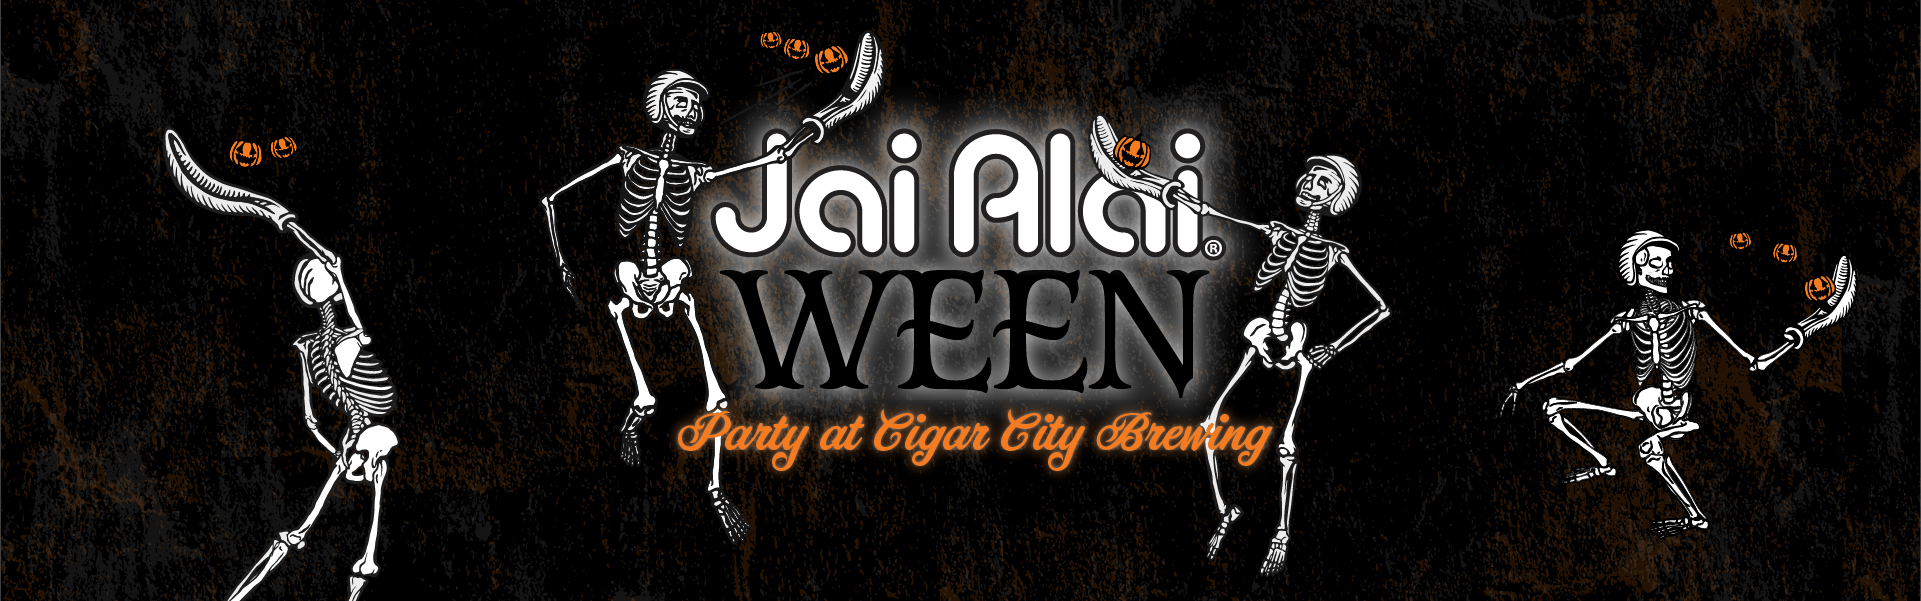 Jai Alai Ween Party at Cigar City Brewing